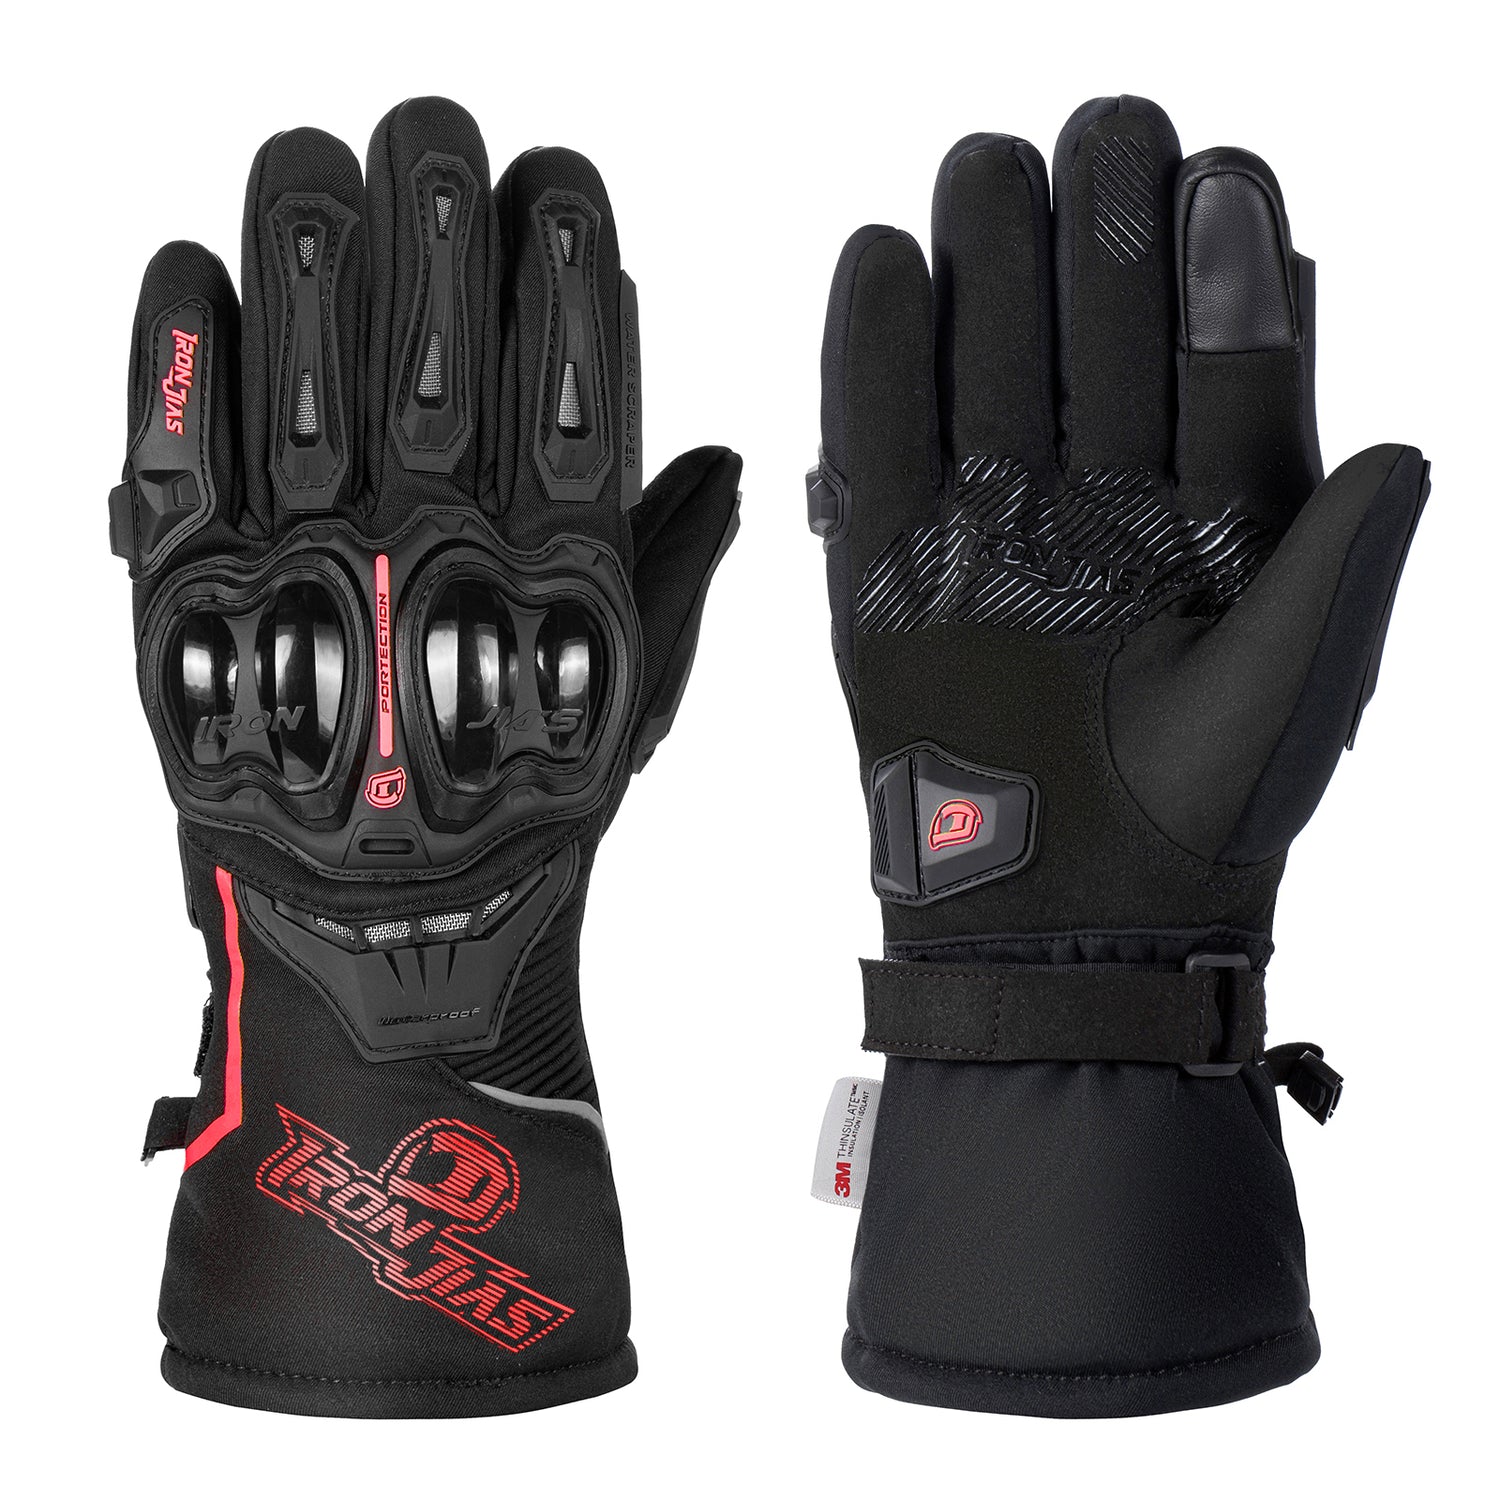 OWSOO Winter Motorcycle Gloves Waterproof Cold Weather Motorcycle Gloves  Warm Riding Gloves